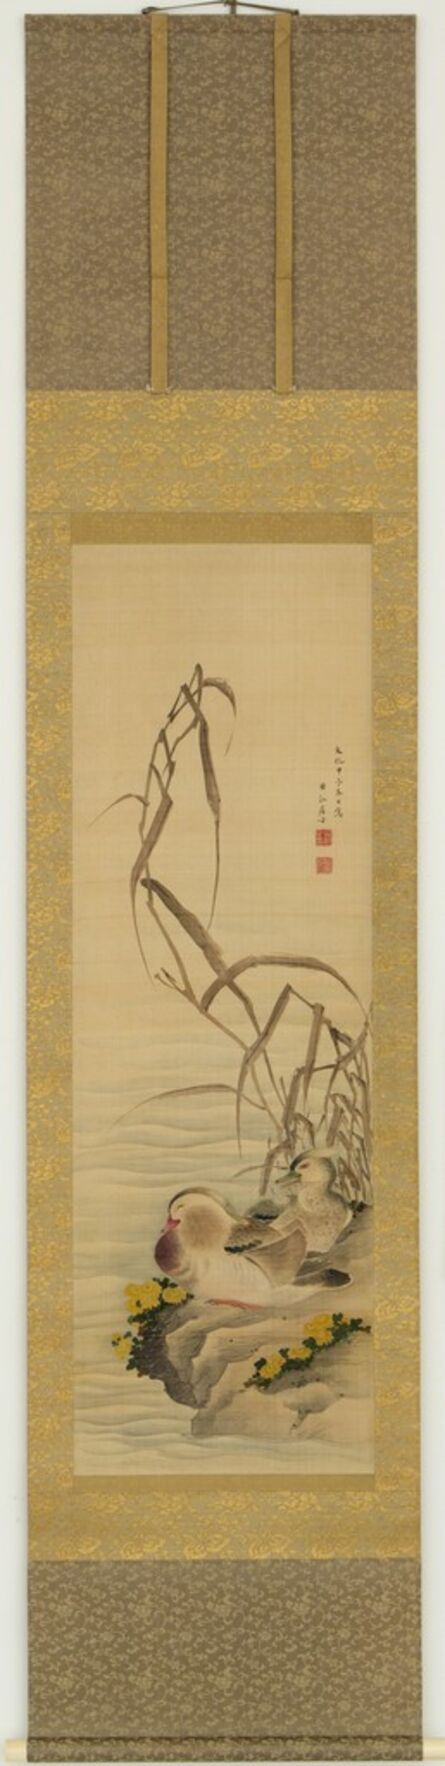 Koike Kyokkou, ‘Scroll with Mandarin Duck Pair (T-3795)’, Edo period (1615, 1868), dated 1804